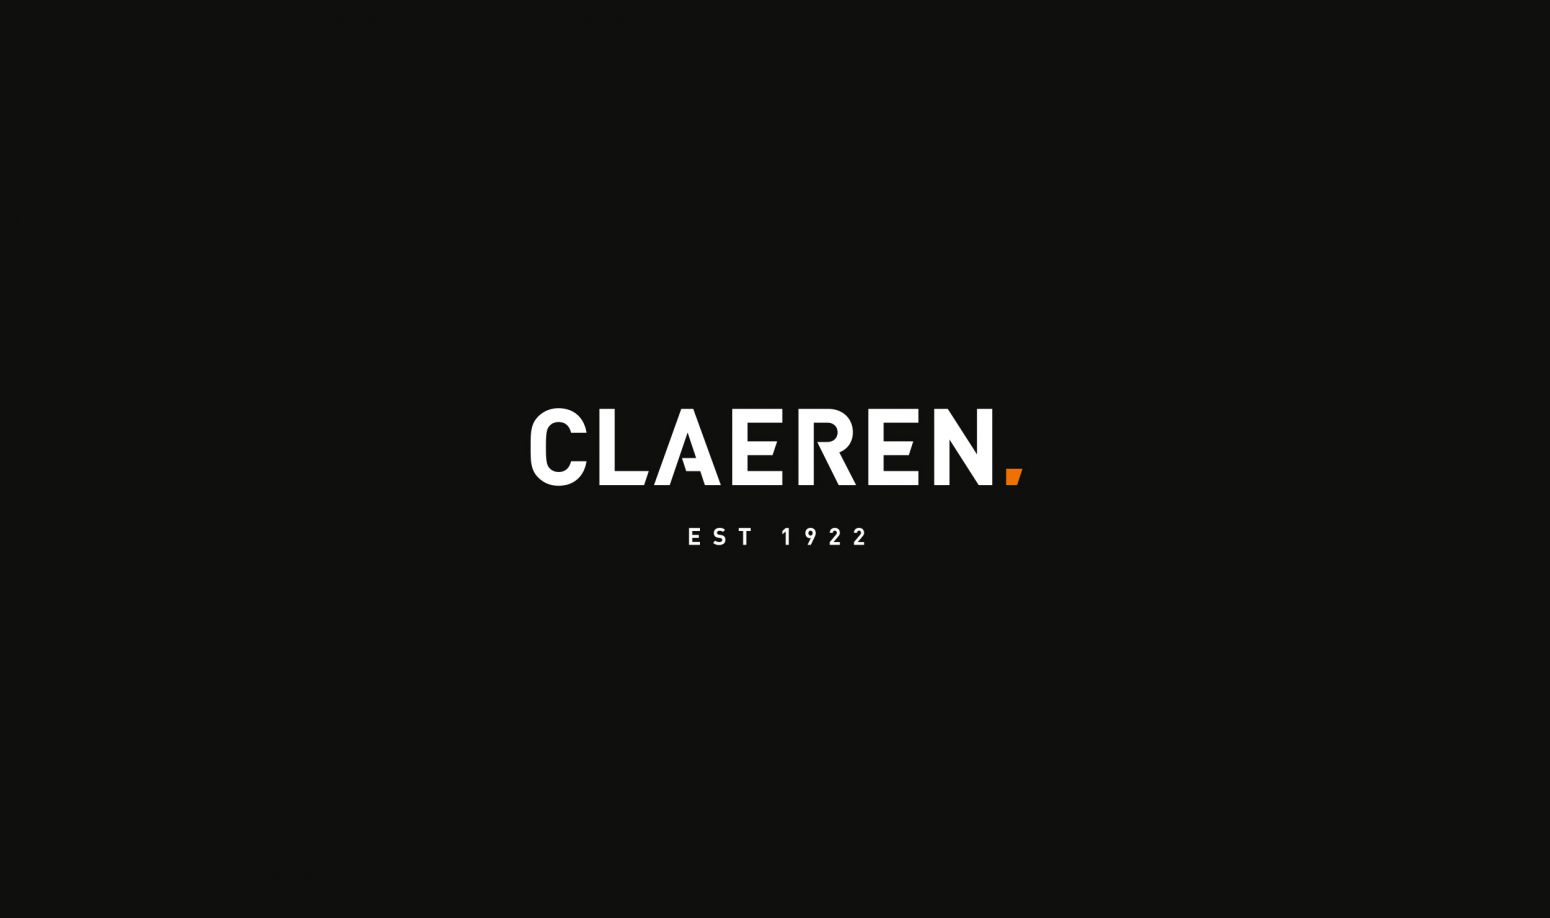 Claeren - AGH & Friends